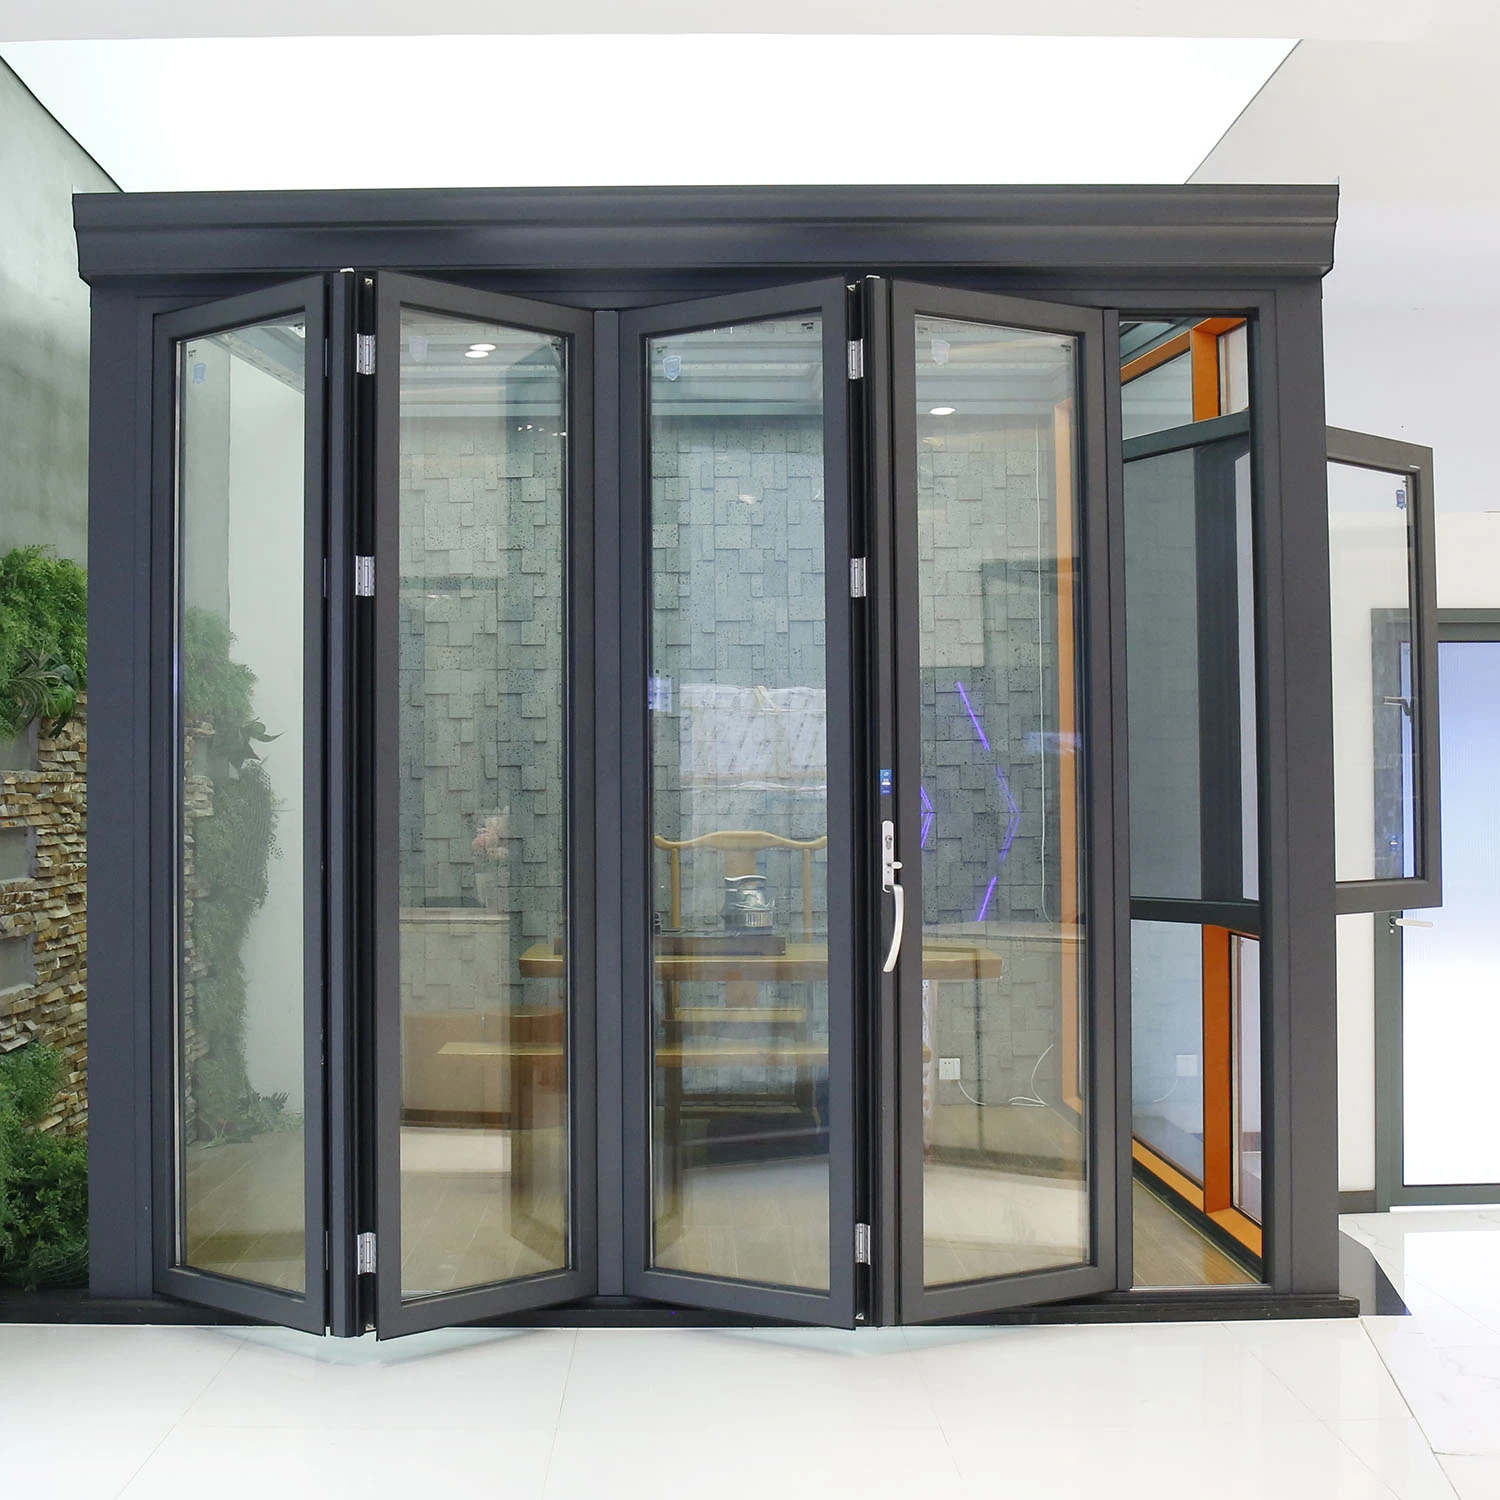 Sixinalu Material de construcción de perfiles de aluminio Home utiliza díptico puerta plegable